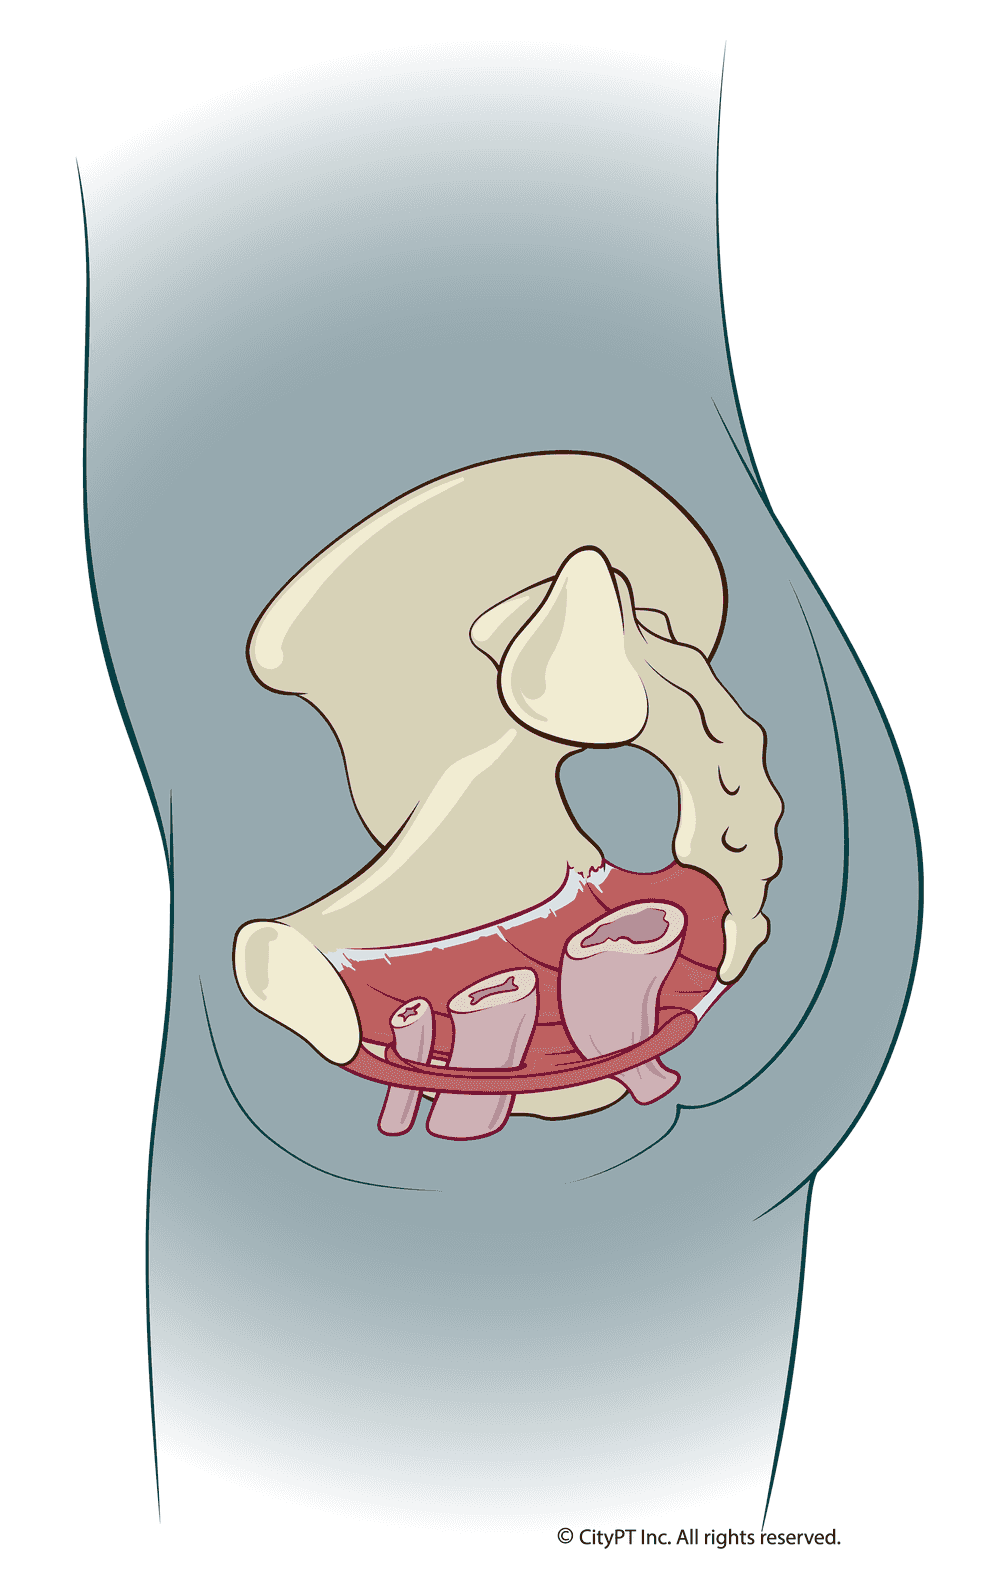 Detailed illustration of pelvic floor dysfunction